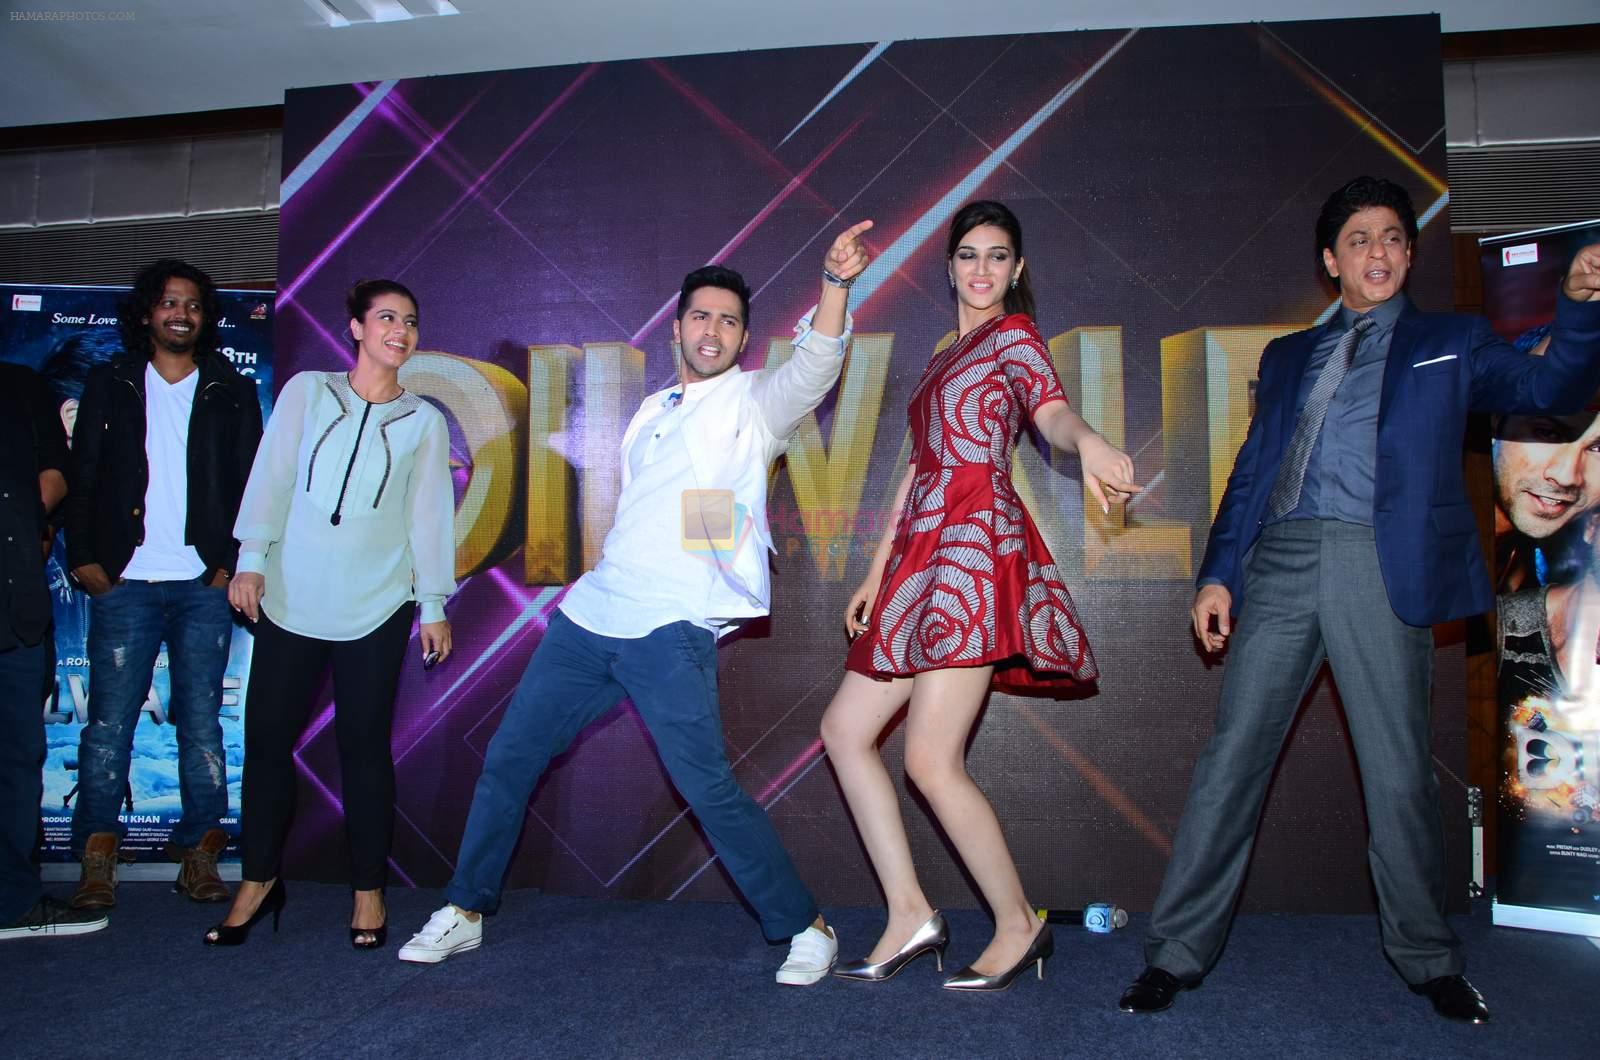 Kriti Sanon, Varun Dhawan, Kajol, Shahrukh Khan at Dilwale music celebrations by Sony Music on 14th Dec 2015